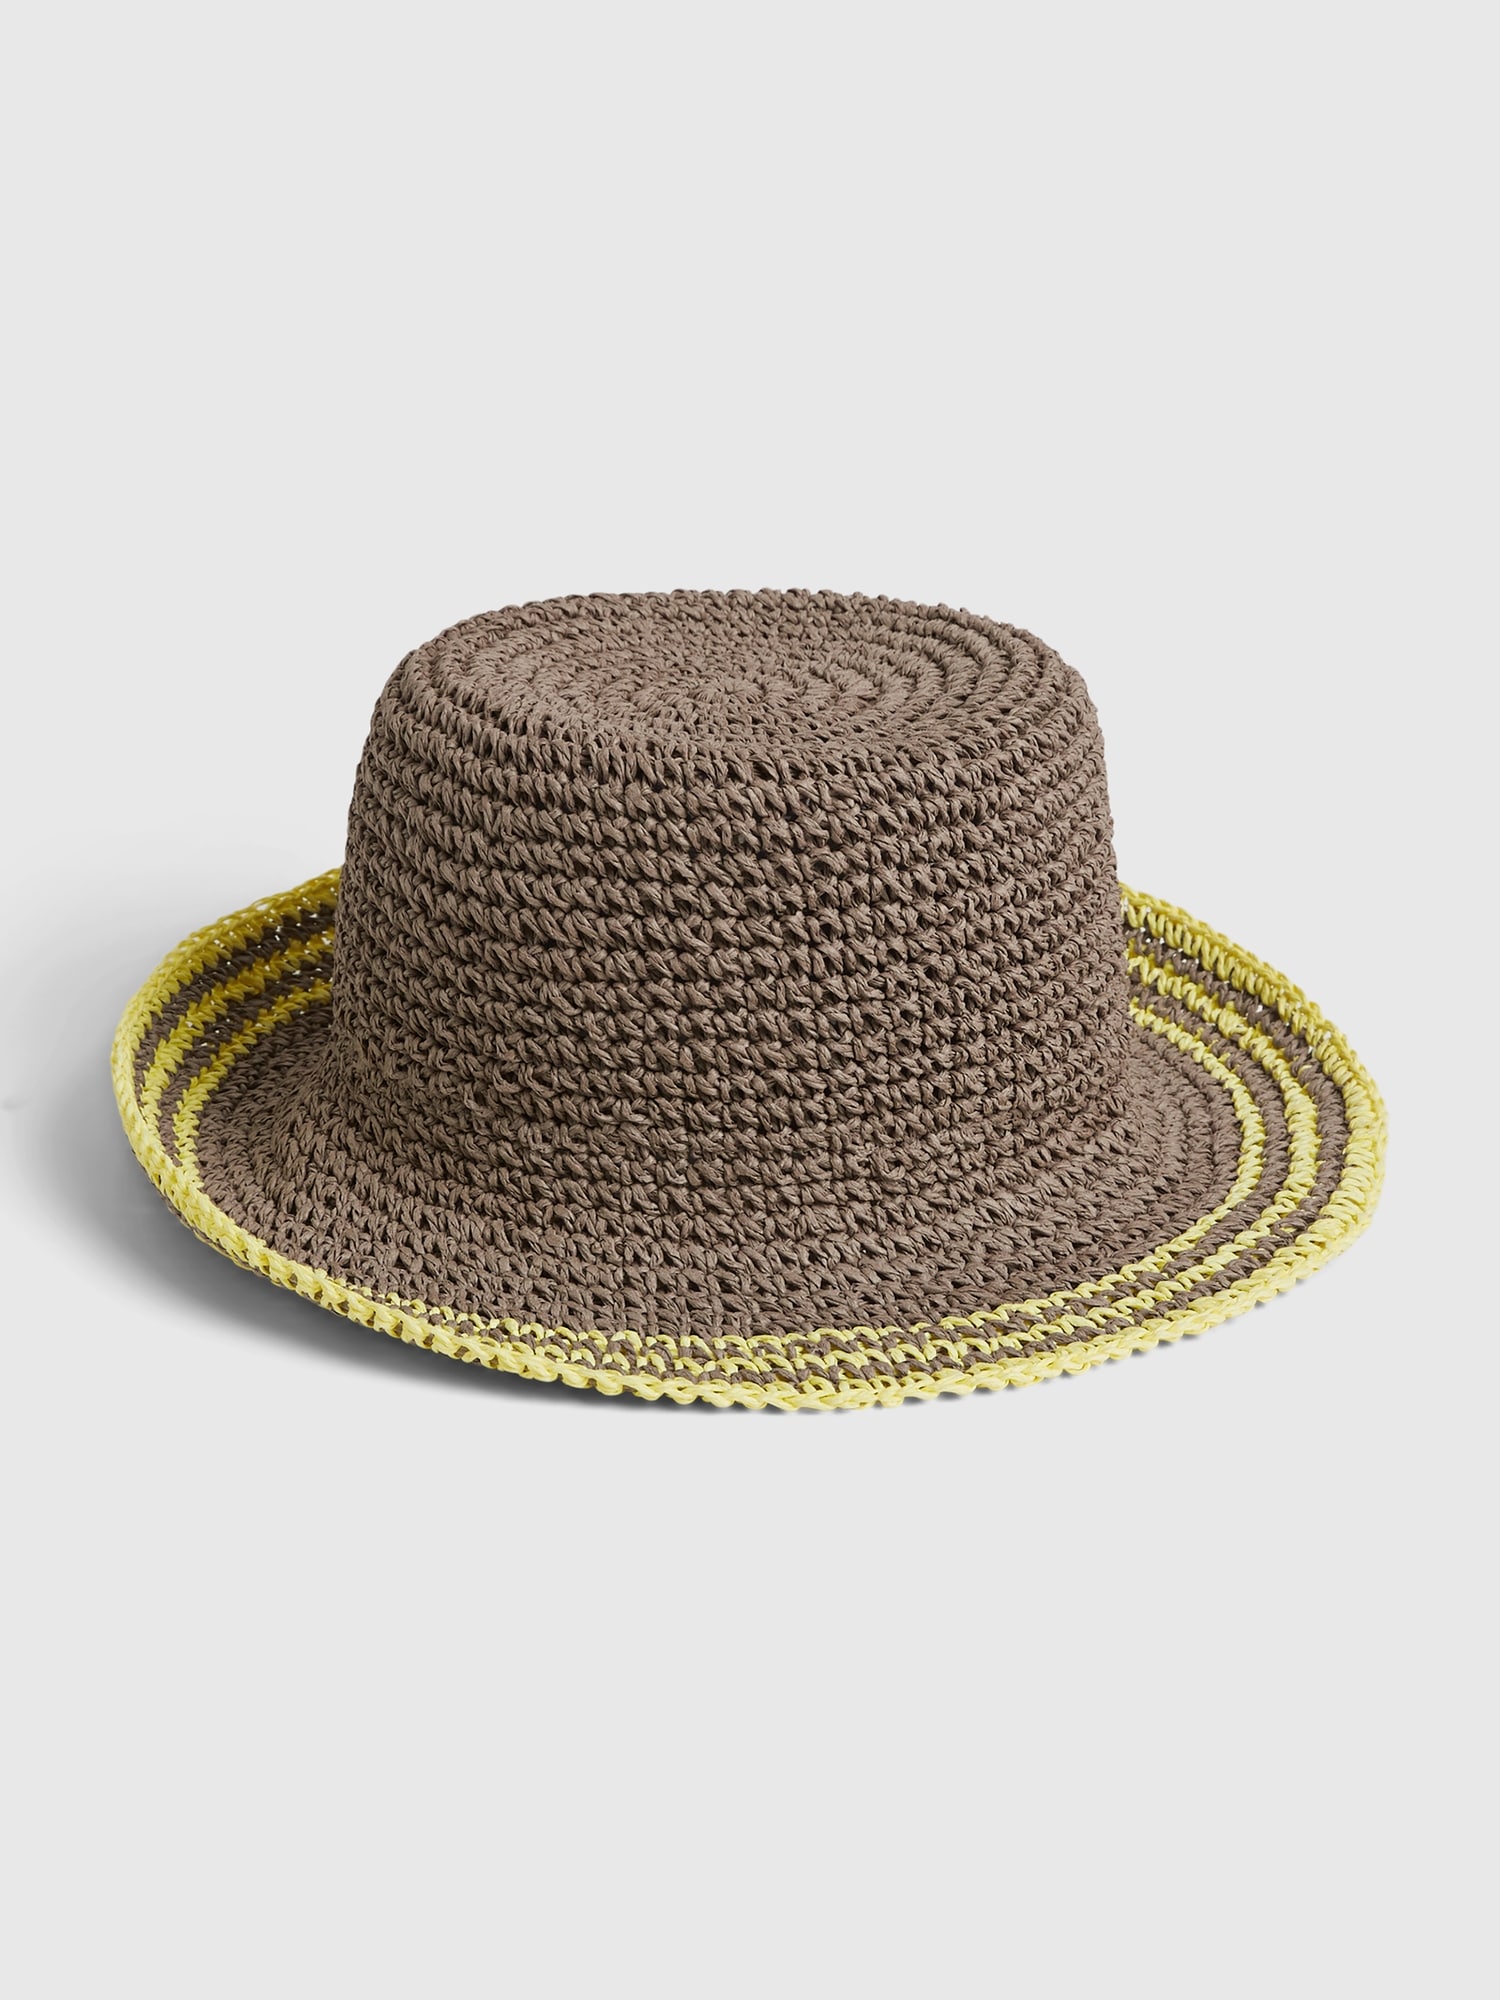 Gap Packable Straw Hat brown. 1